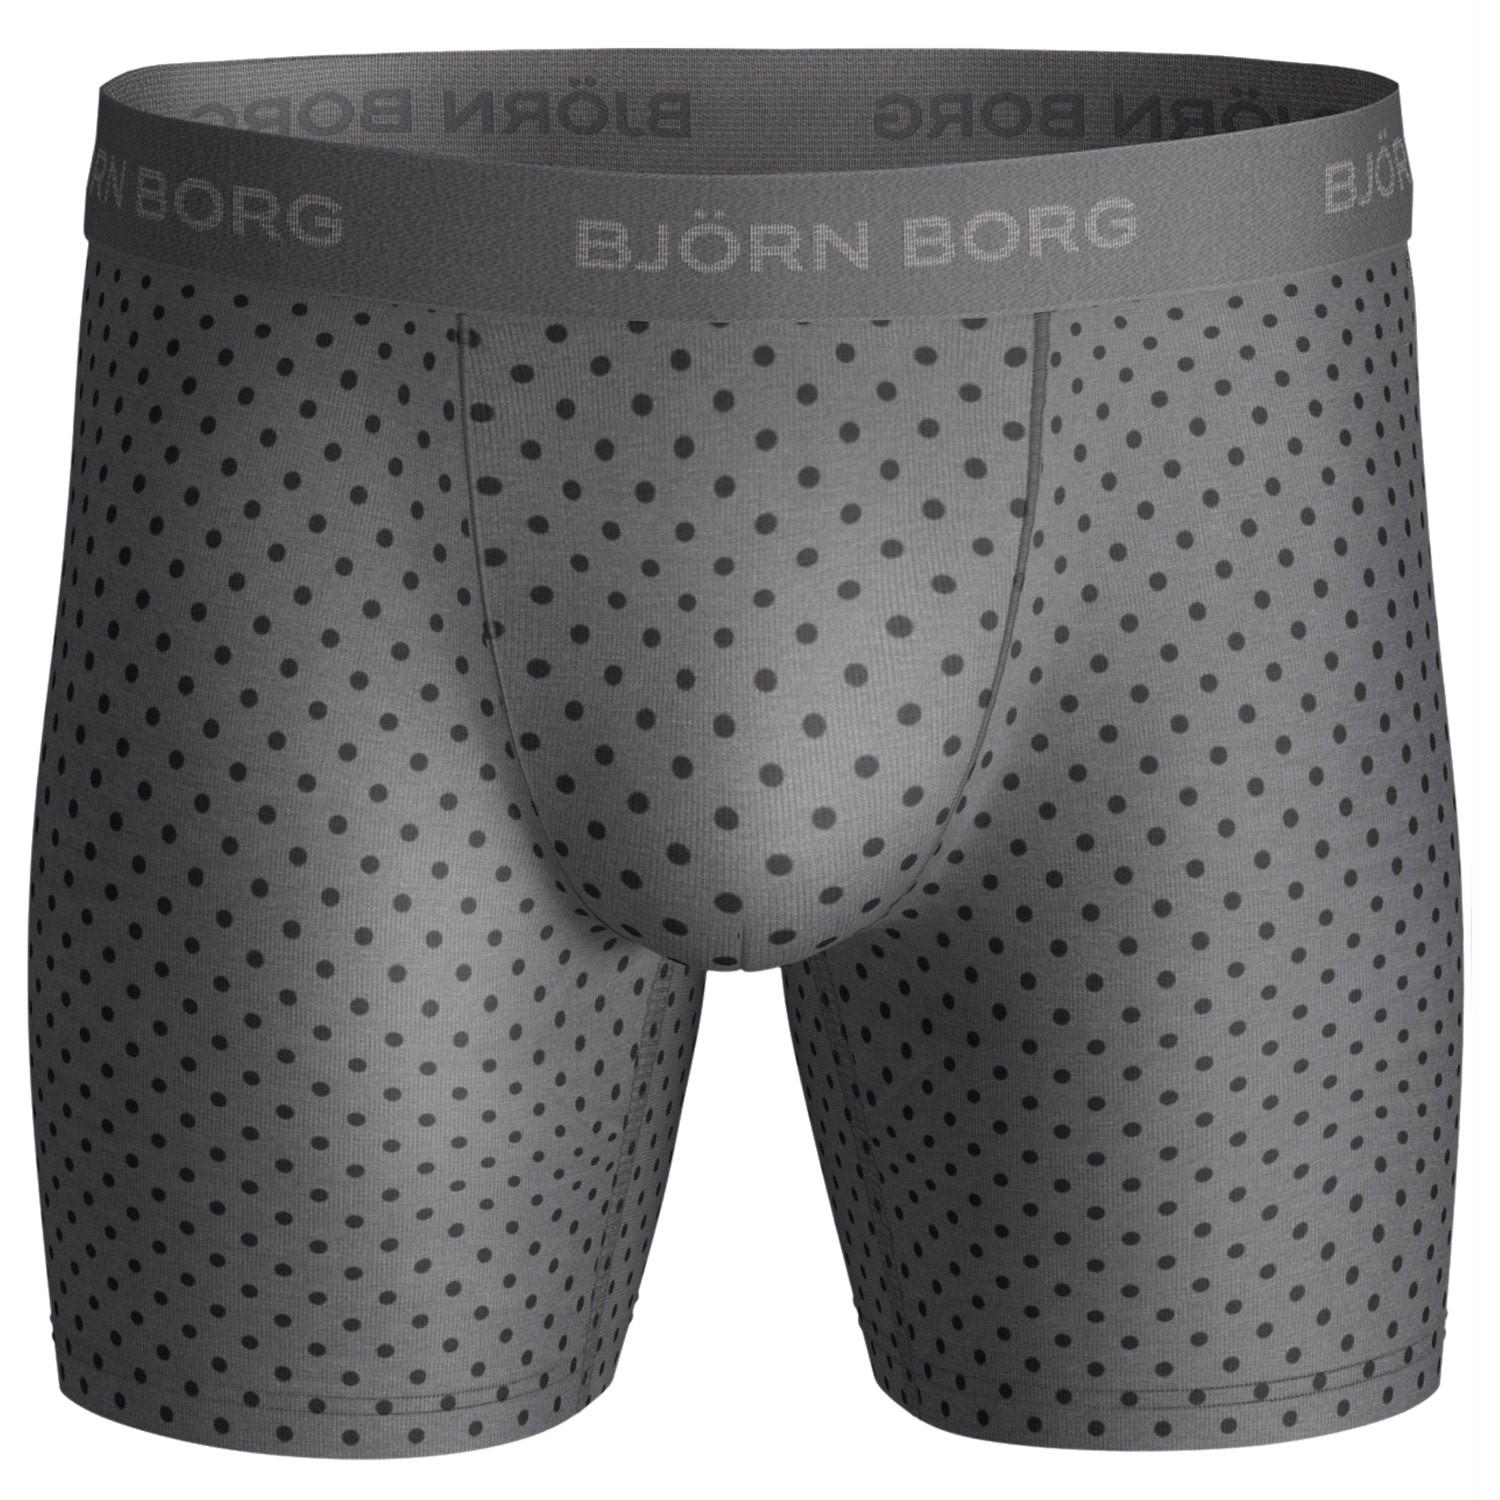 Björn Borg Lightweight Microfiber Shorts Dots